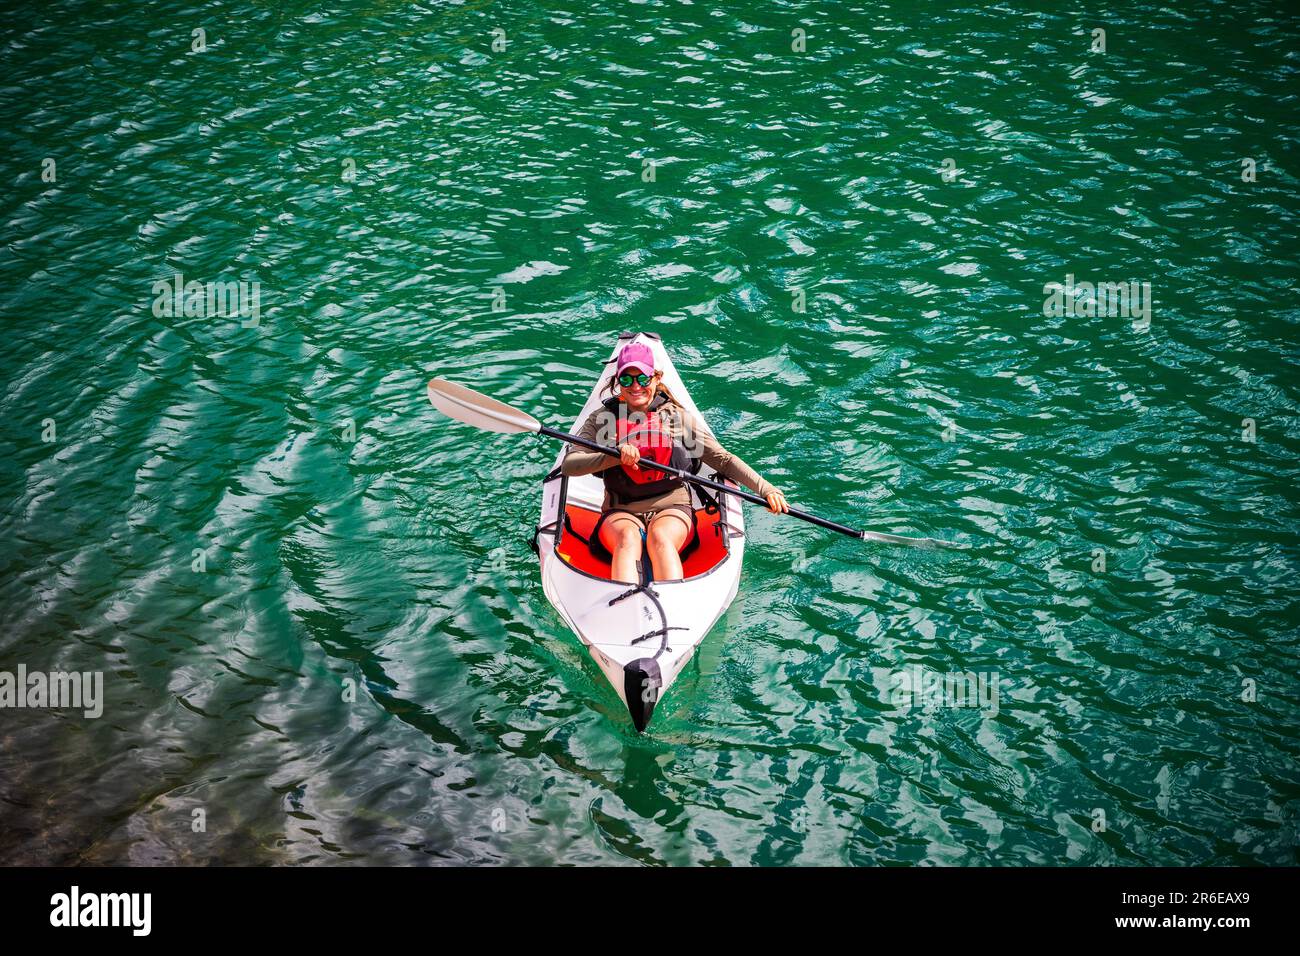 Woman Kayaking in Green Water Stock Photo